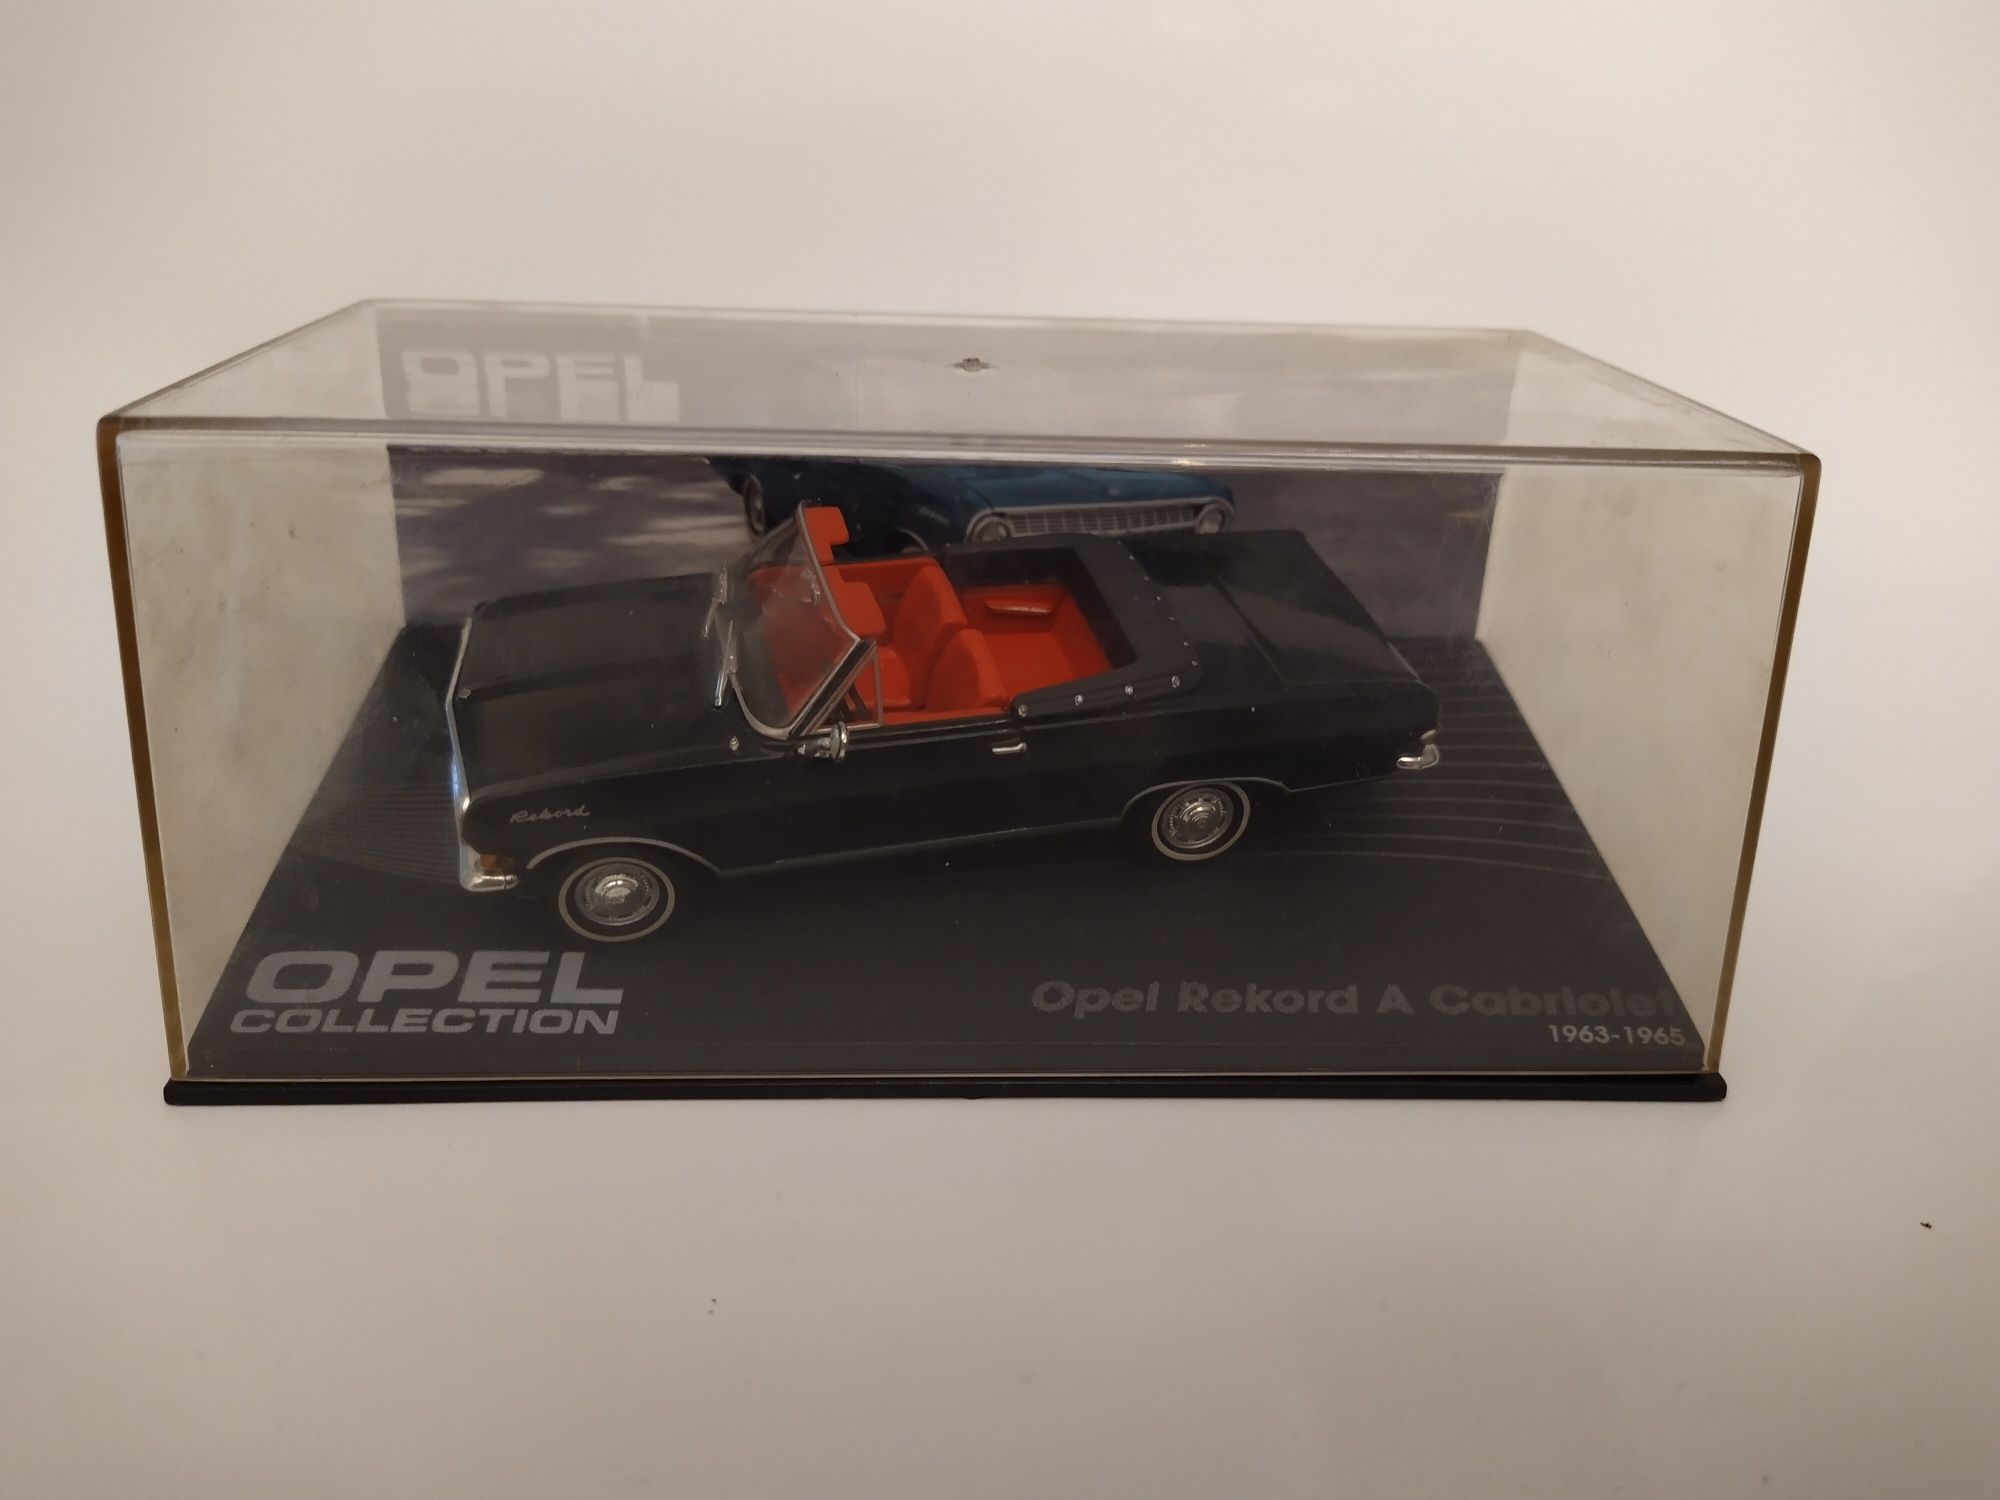 Opel Rekord A cabriolet opel collection Eaglemoss Altaya Skala 1:43